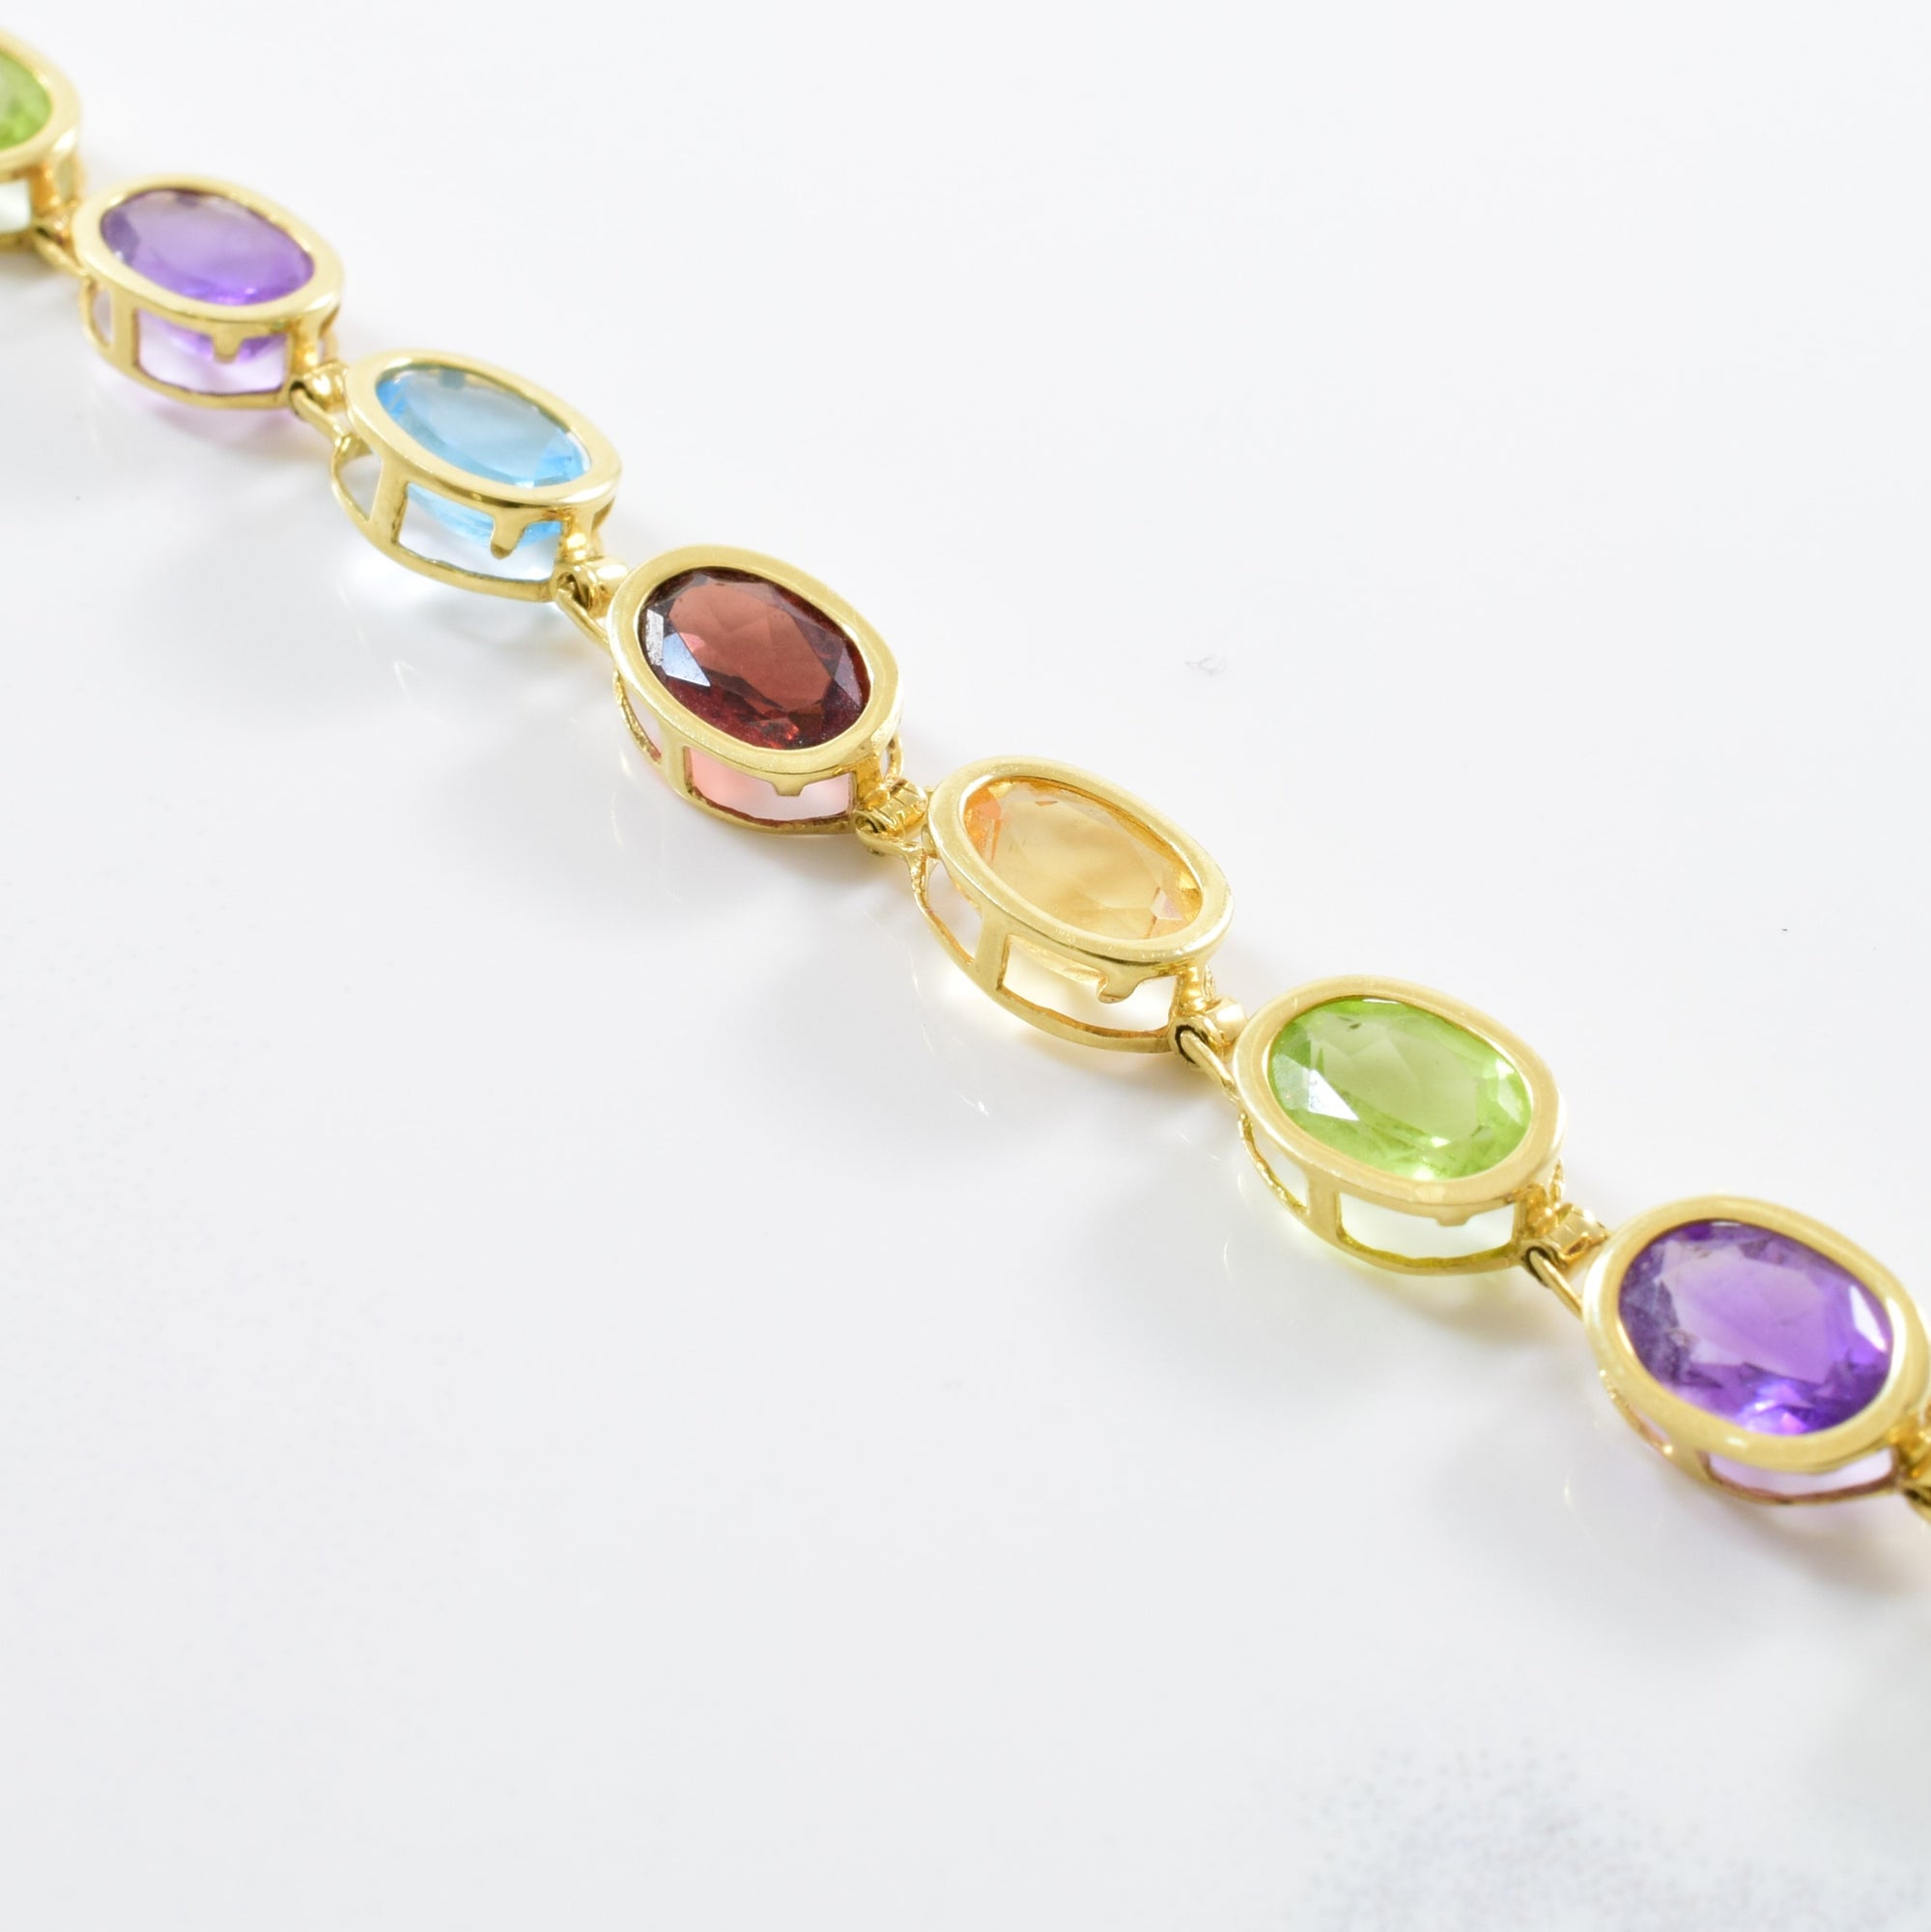 Multi Coloured Gemstone Bracelet | 8